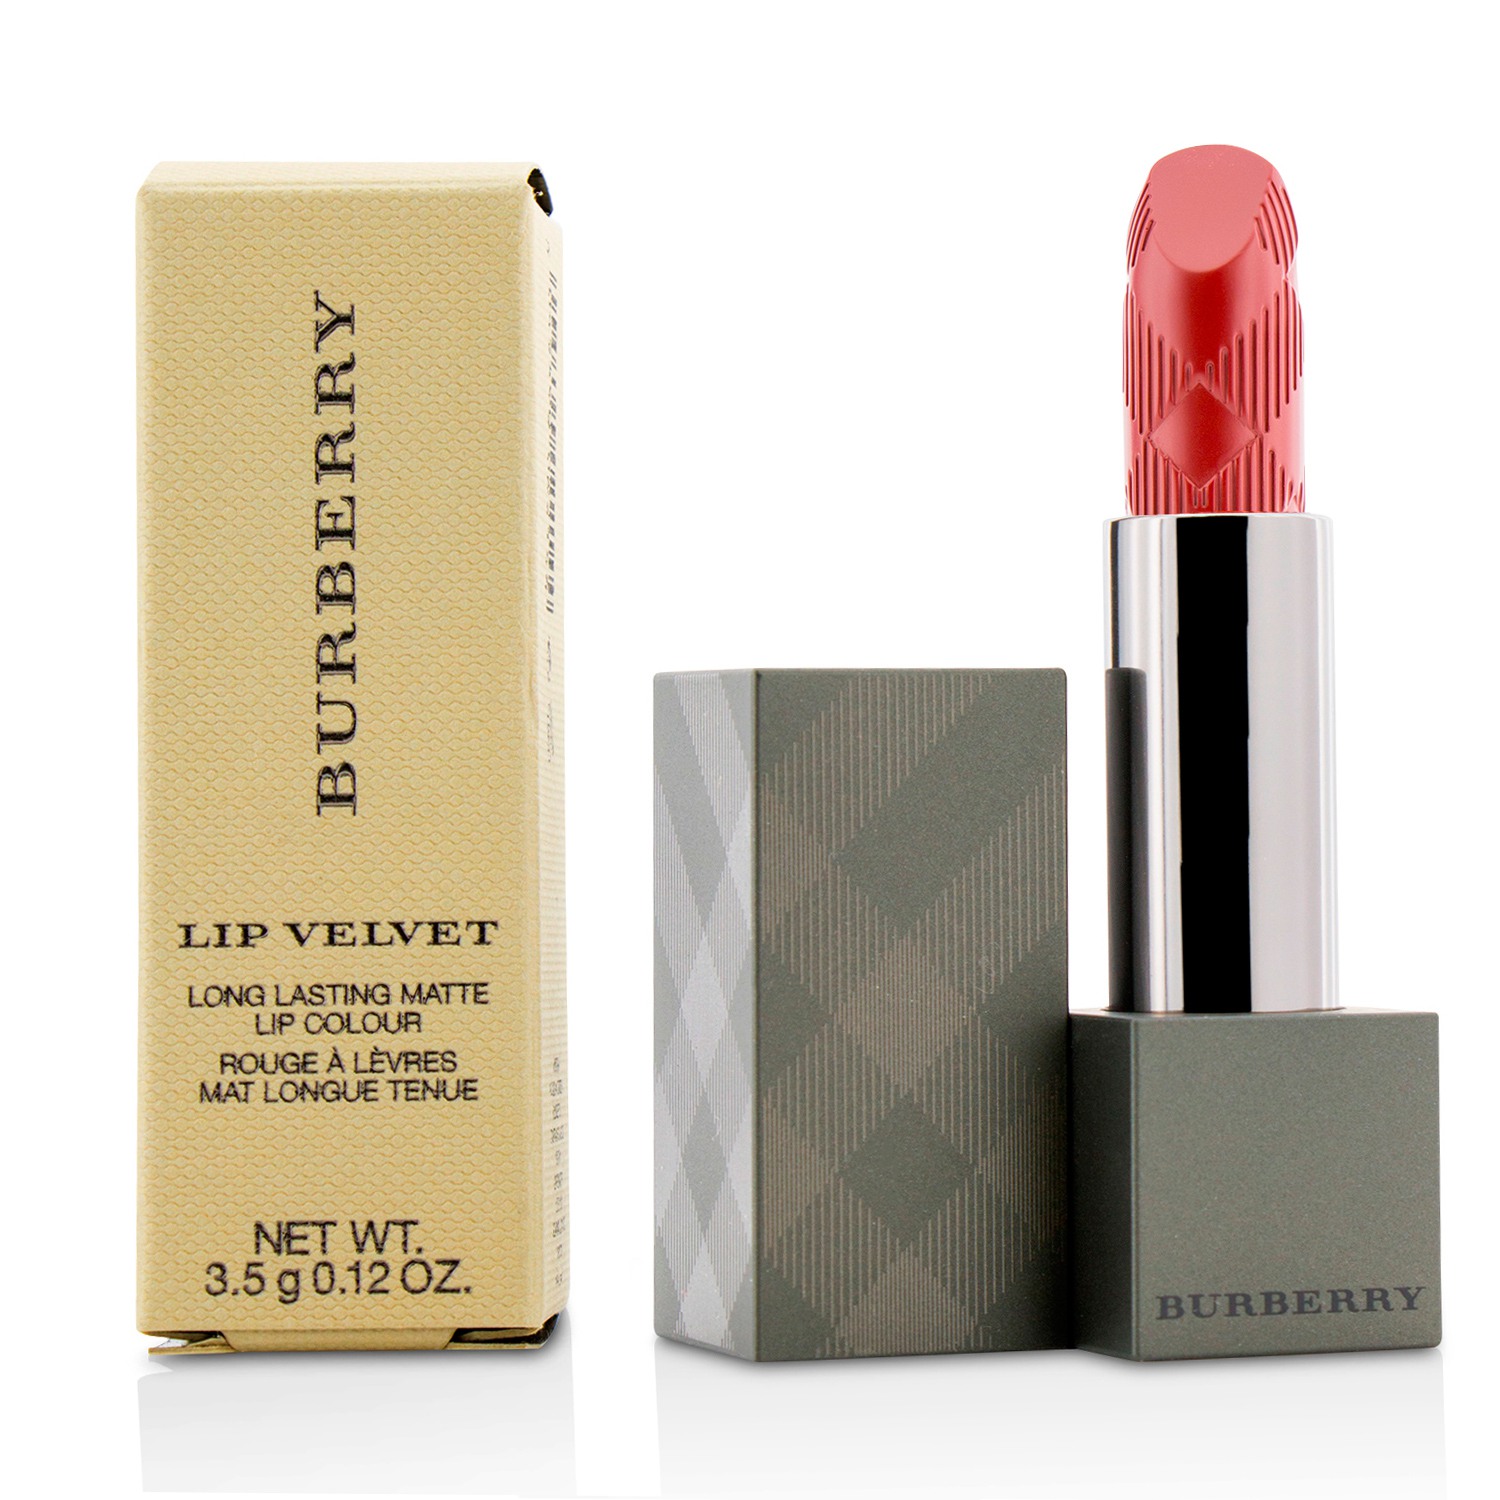 Lip Velvet Long Lasting Matte Lip Colour - # No. 434 Ruby Burberry Image